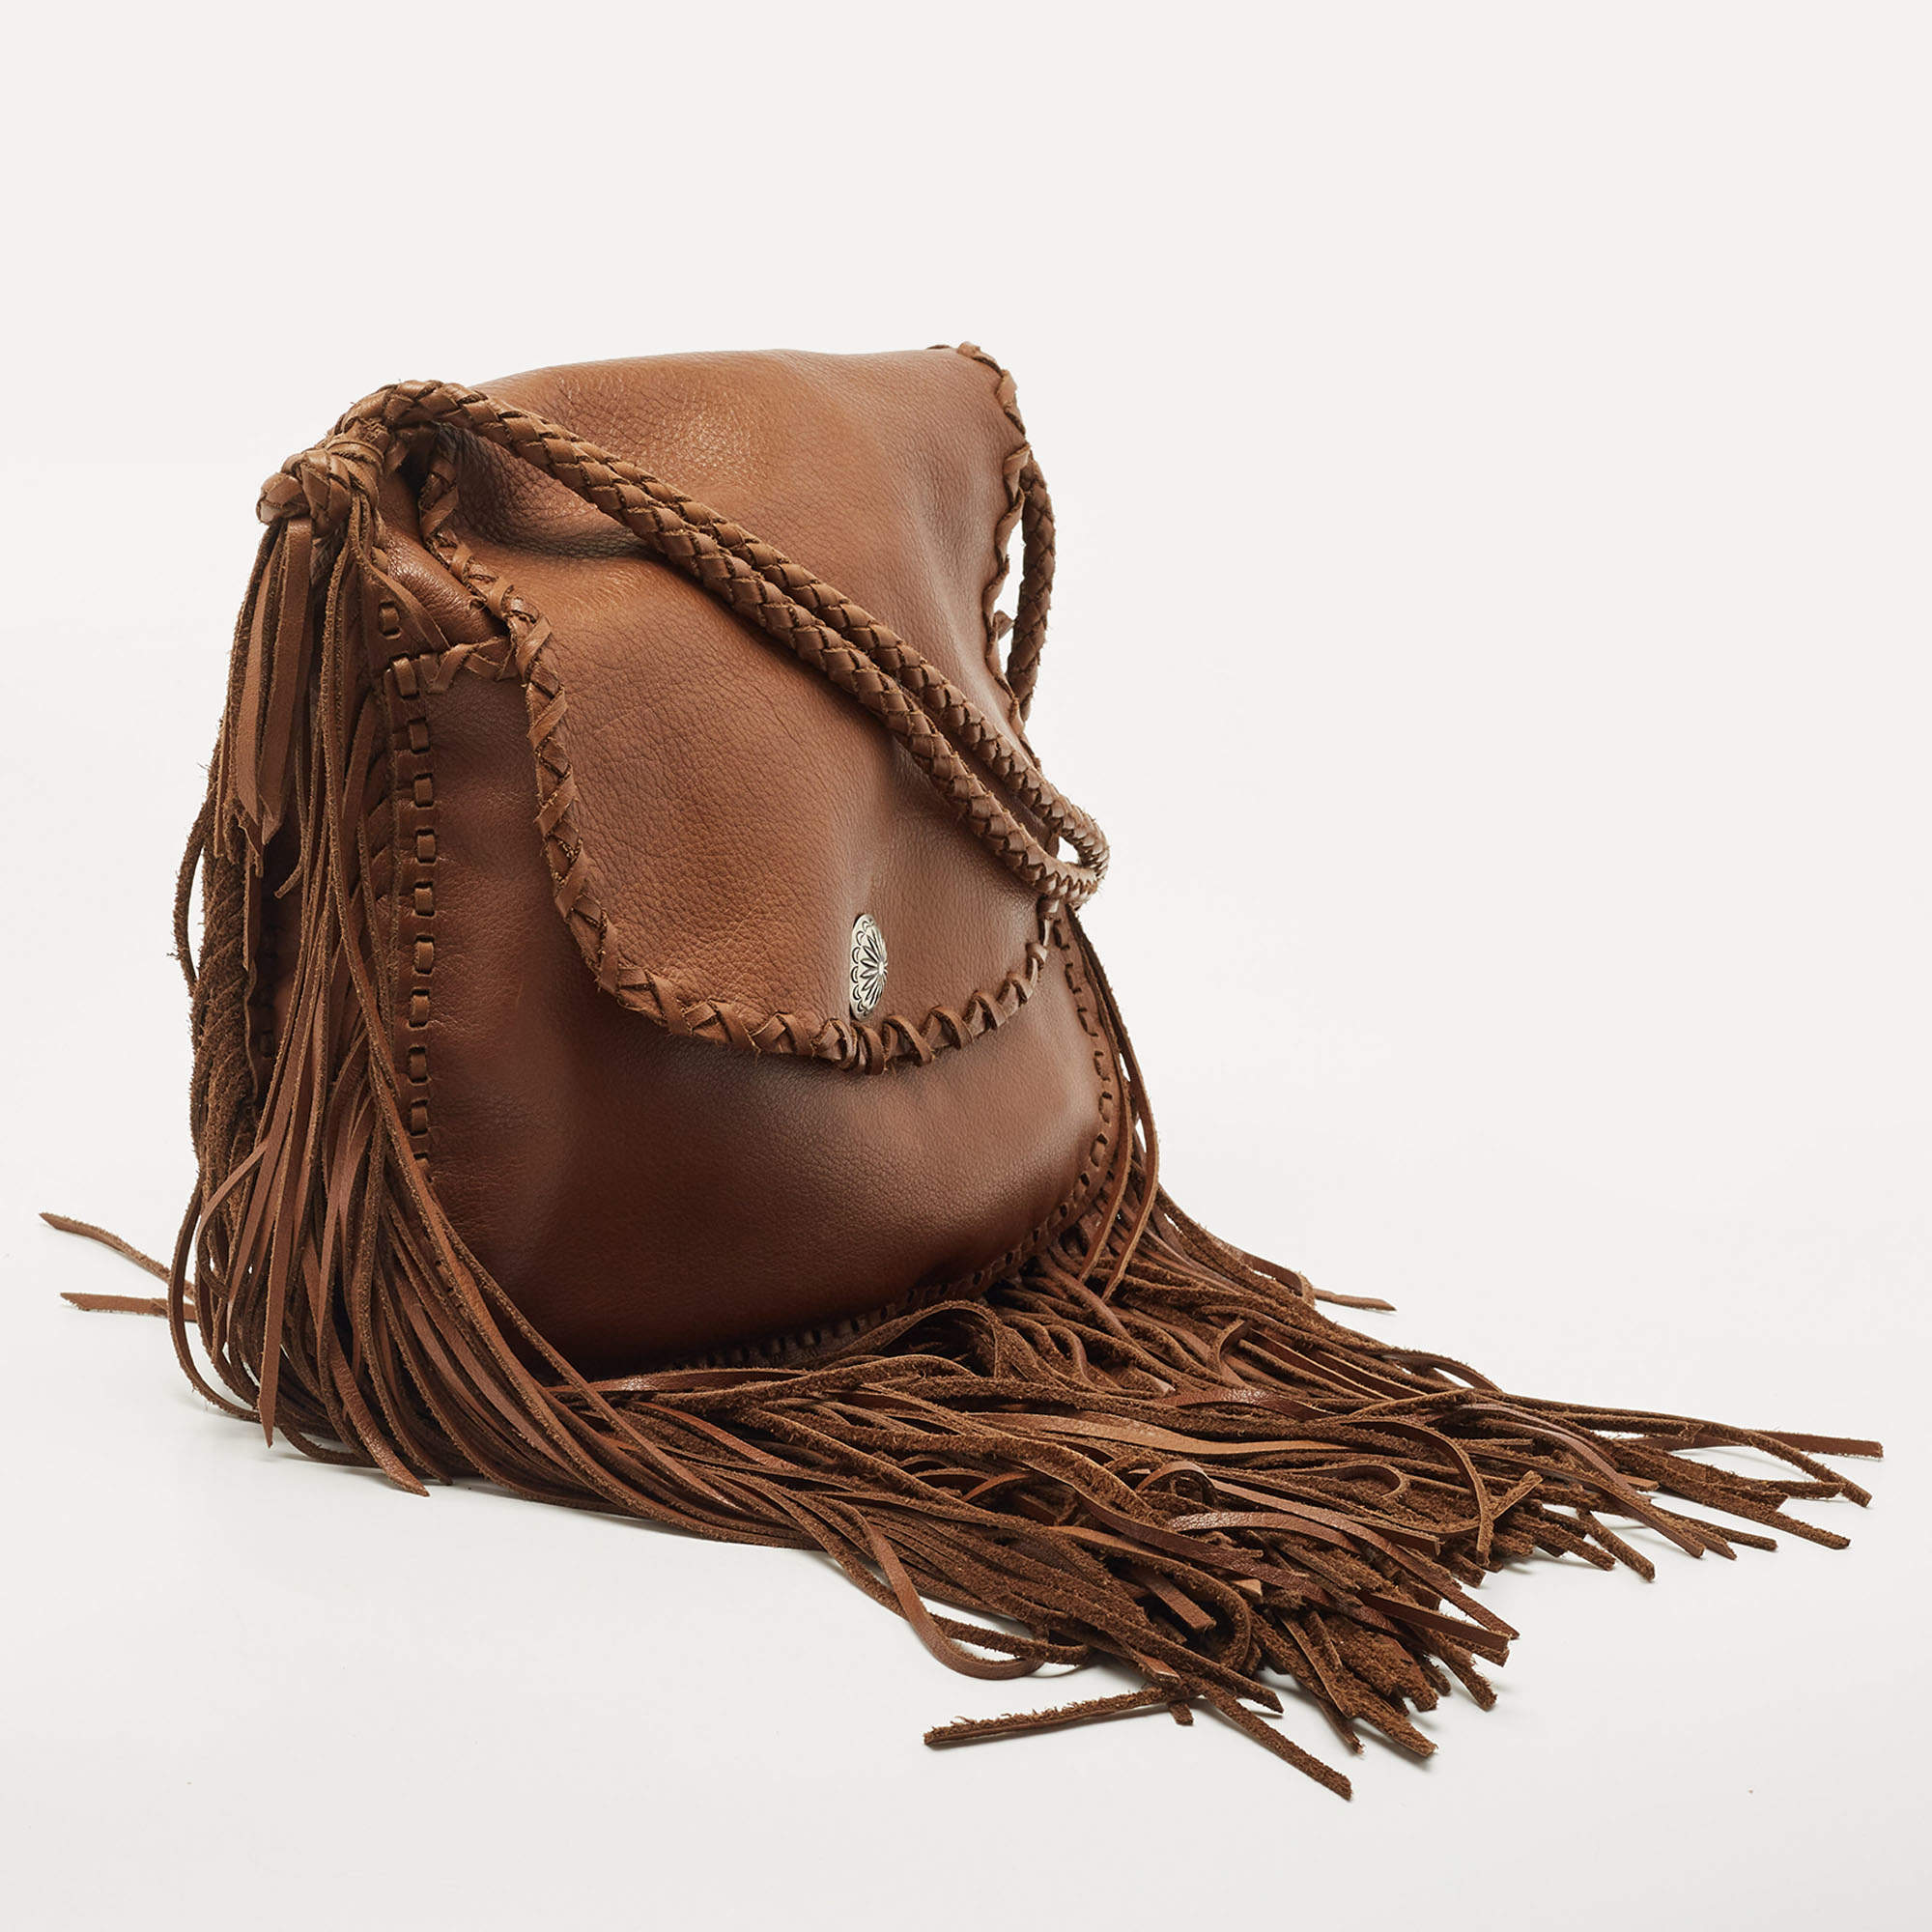 Ralph Lauren Tassel Leather Crossbody Bag - Brown Crossbody Bags, Handbags  - WYG107598